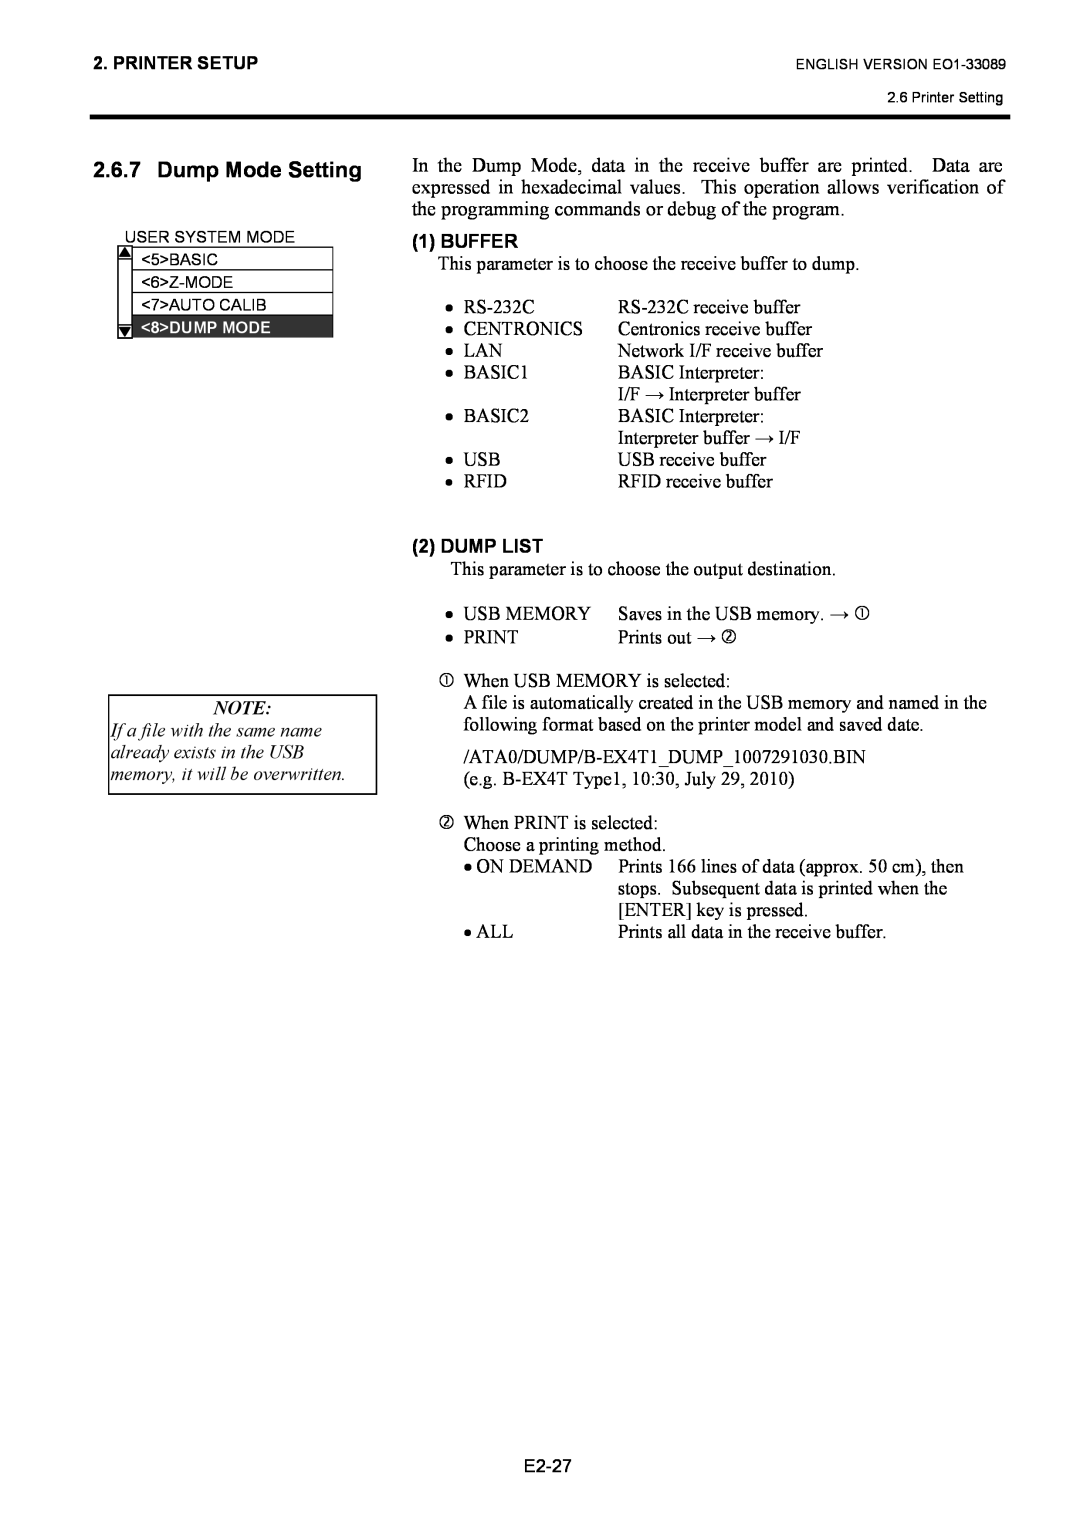 Toshiba B-EX4T1 manual Dump Mode Setting, Buffer, Dump List 